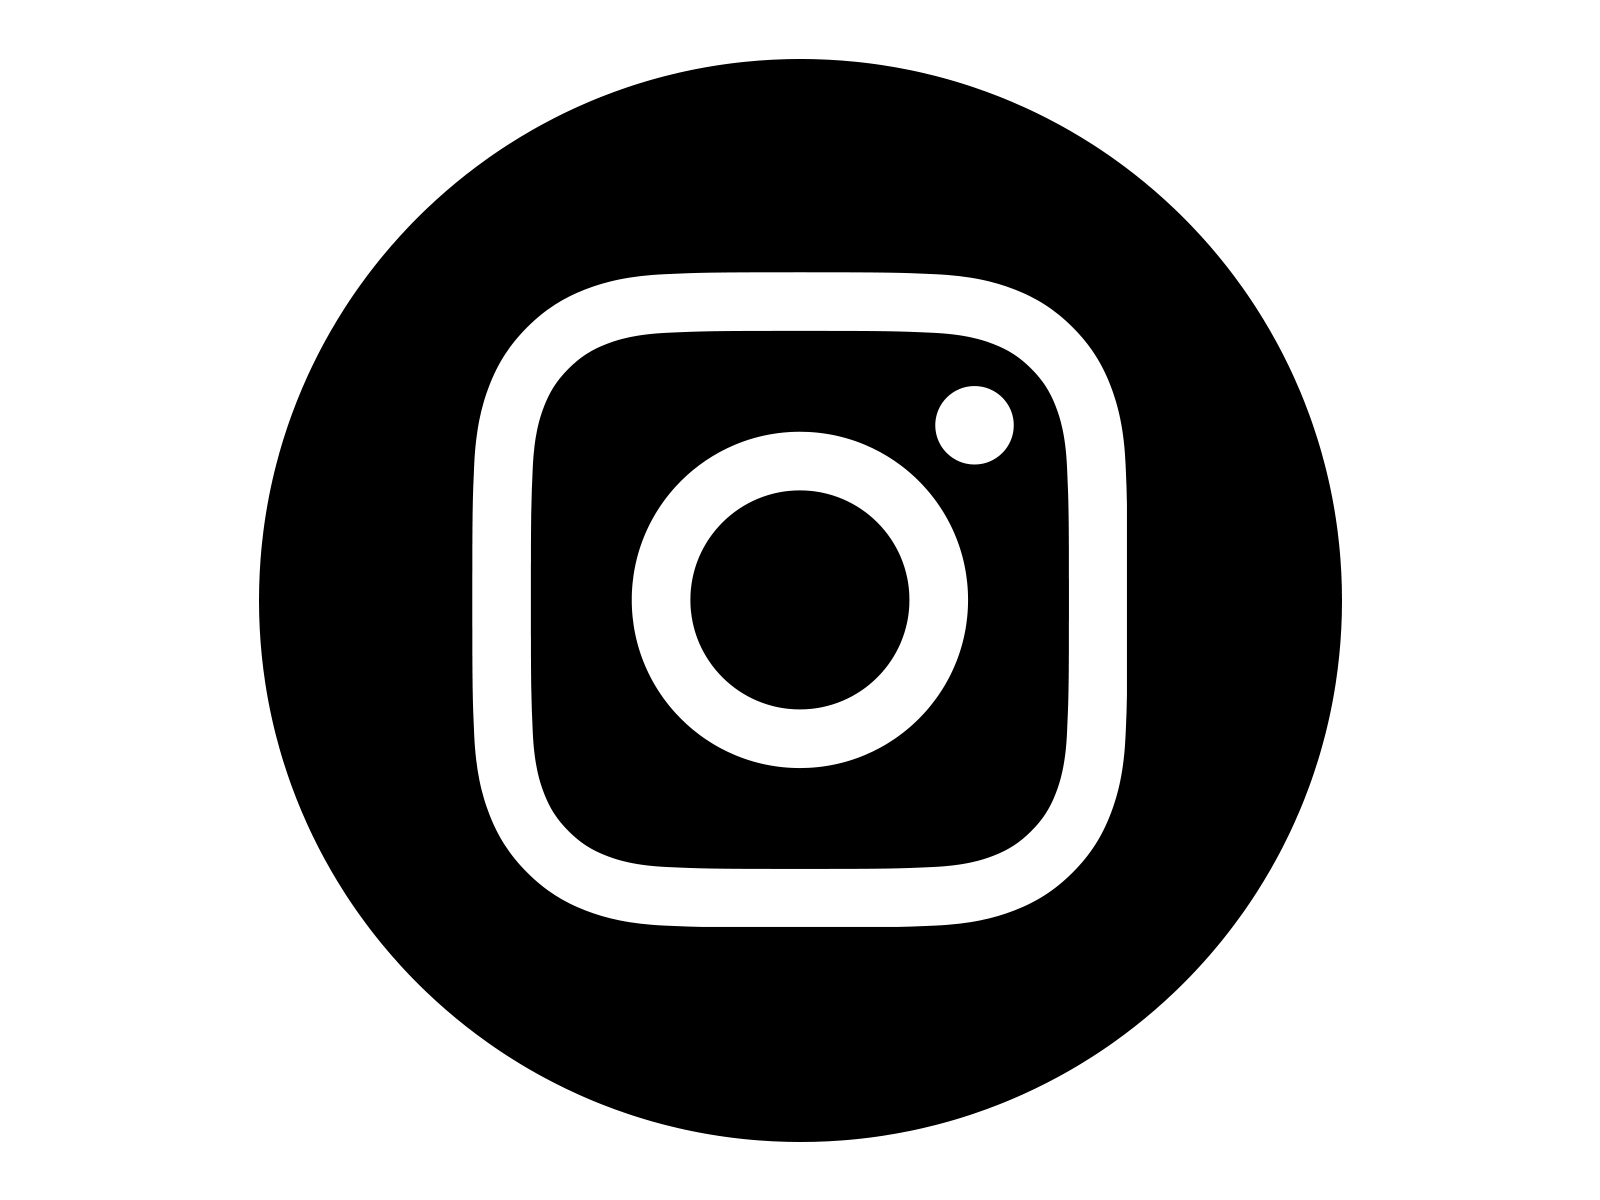 White Instagram Logo - Instagram Icon White on Black Circle. png. Instagram logo